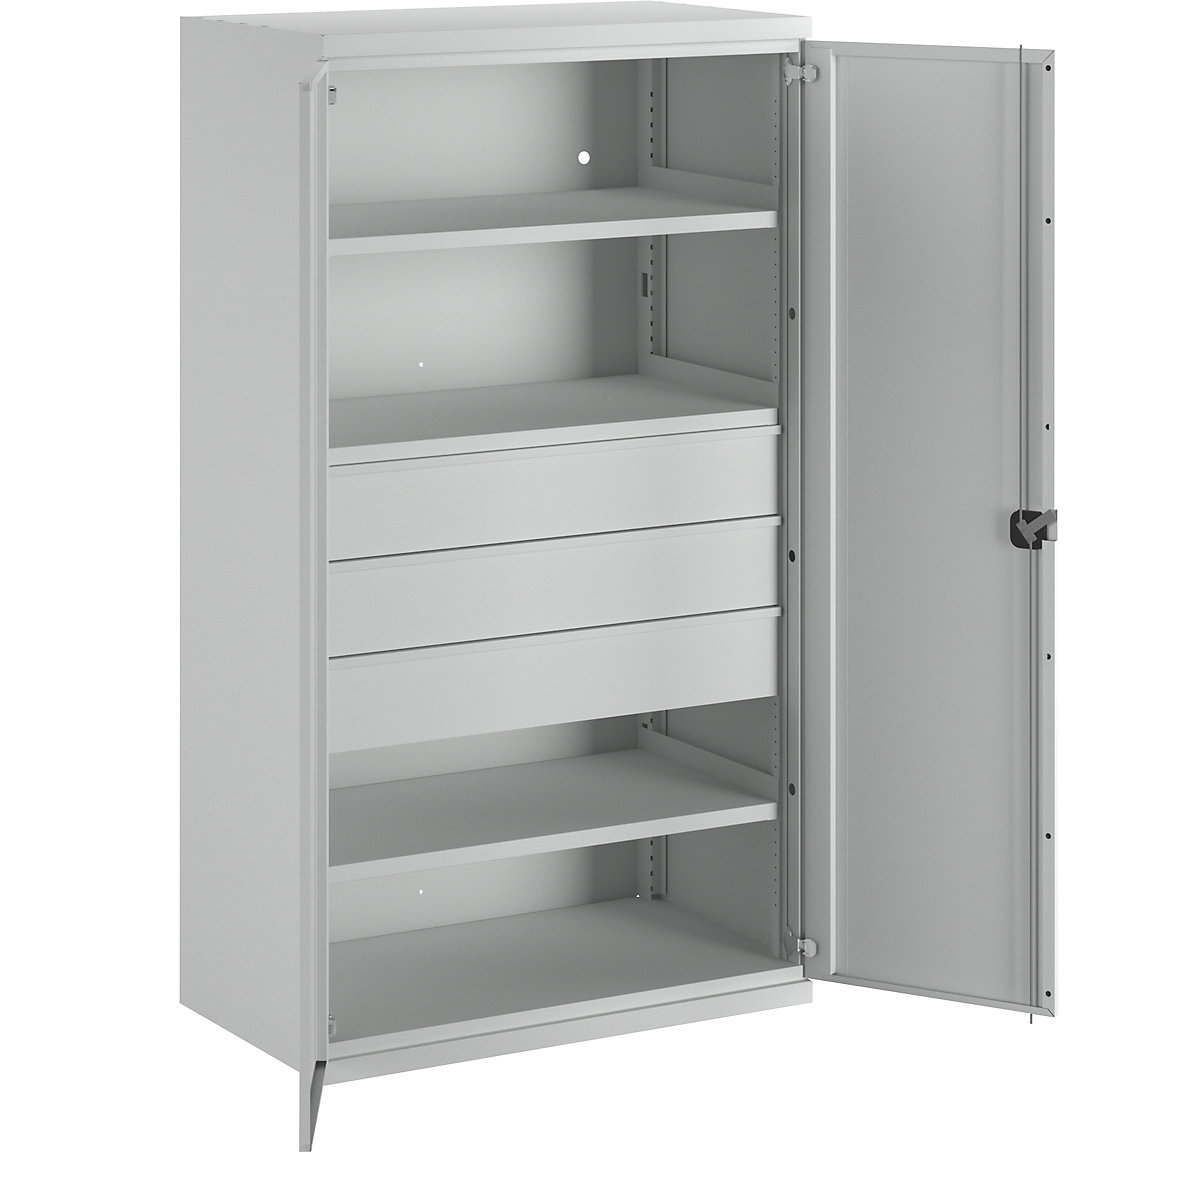 Heavy duty cupboard made of steel – eurokraft pro, 3 shelves, 3 x 180 mm high drawers, light grey / light grey-4